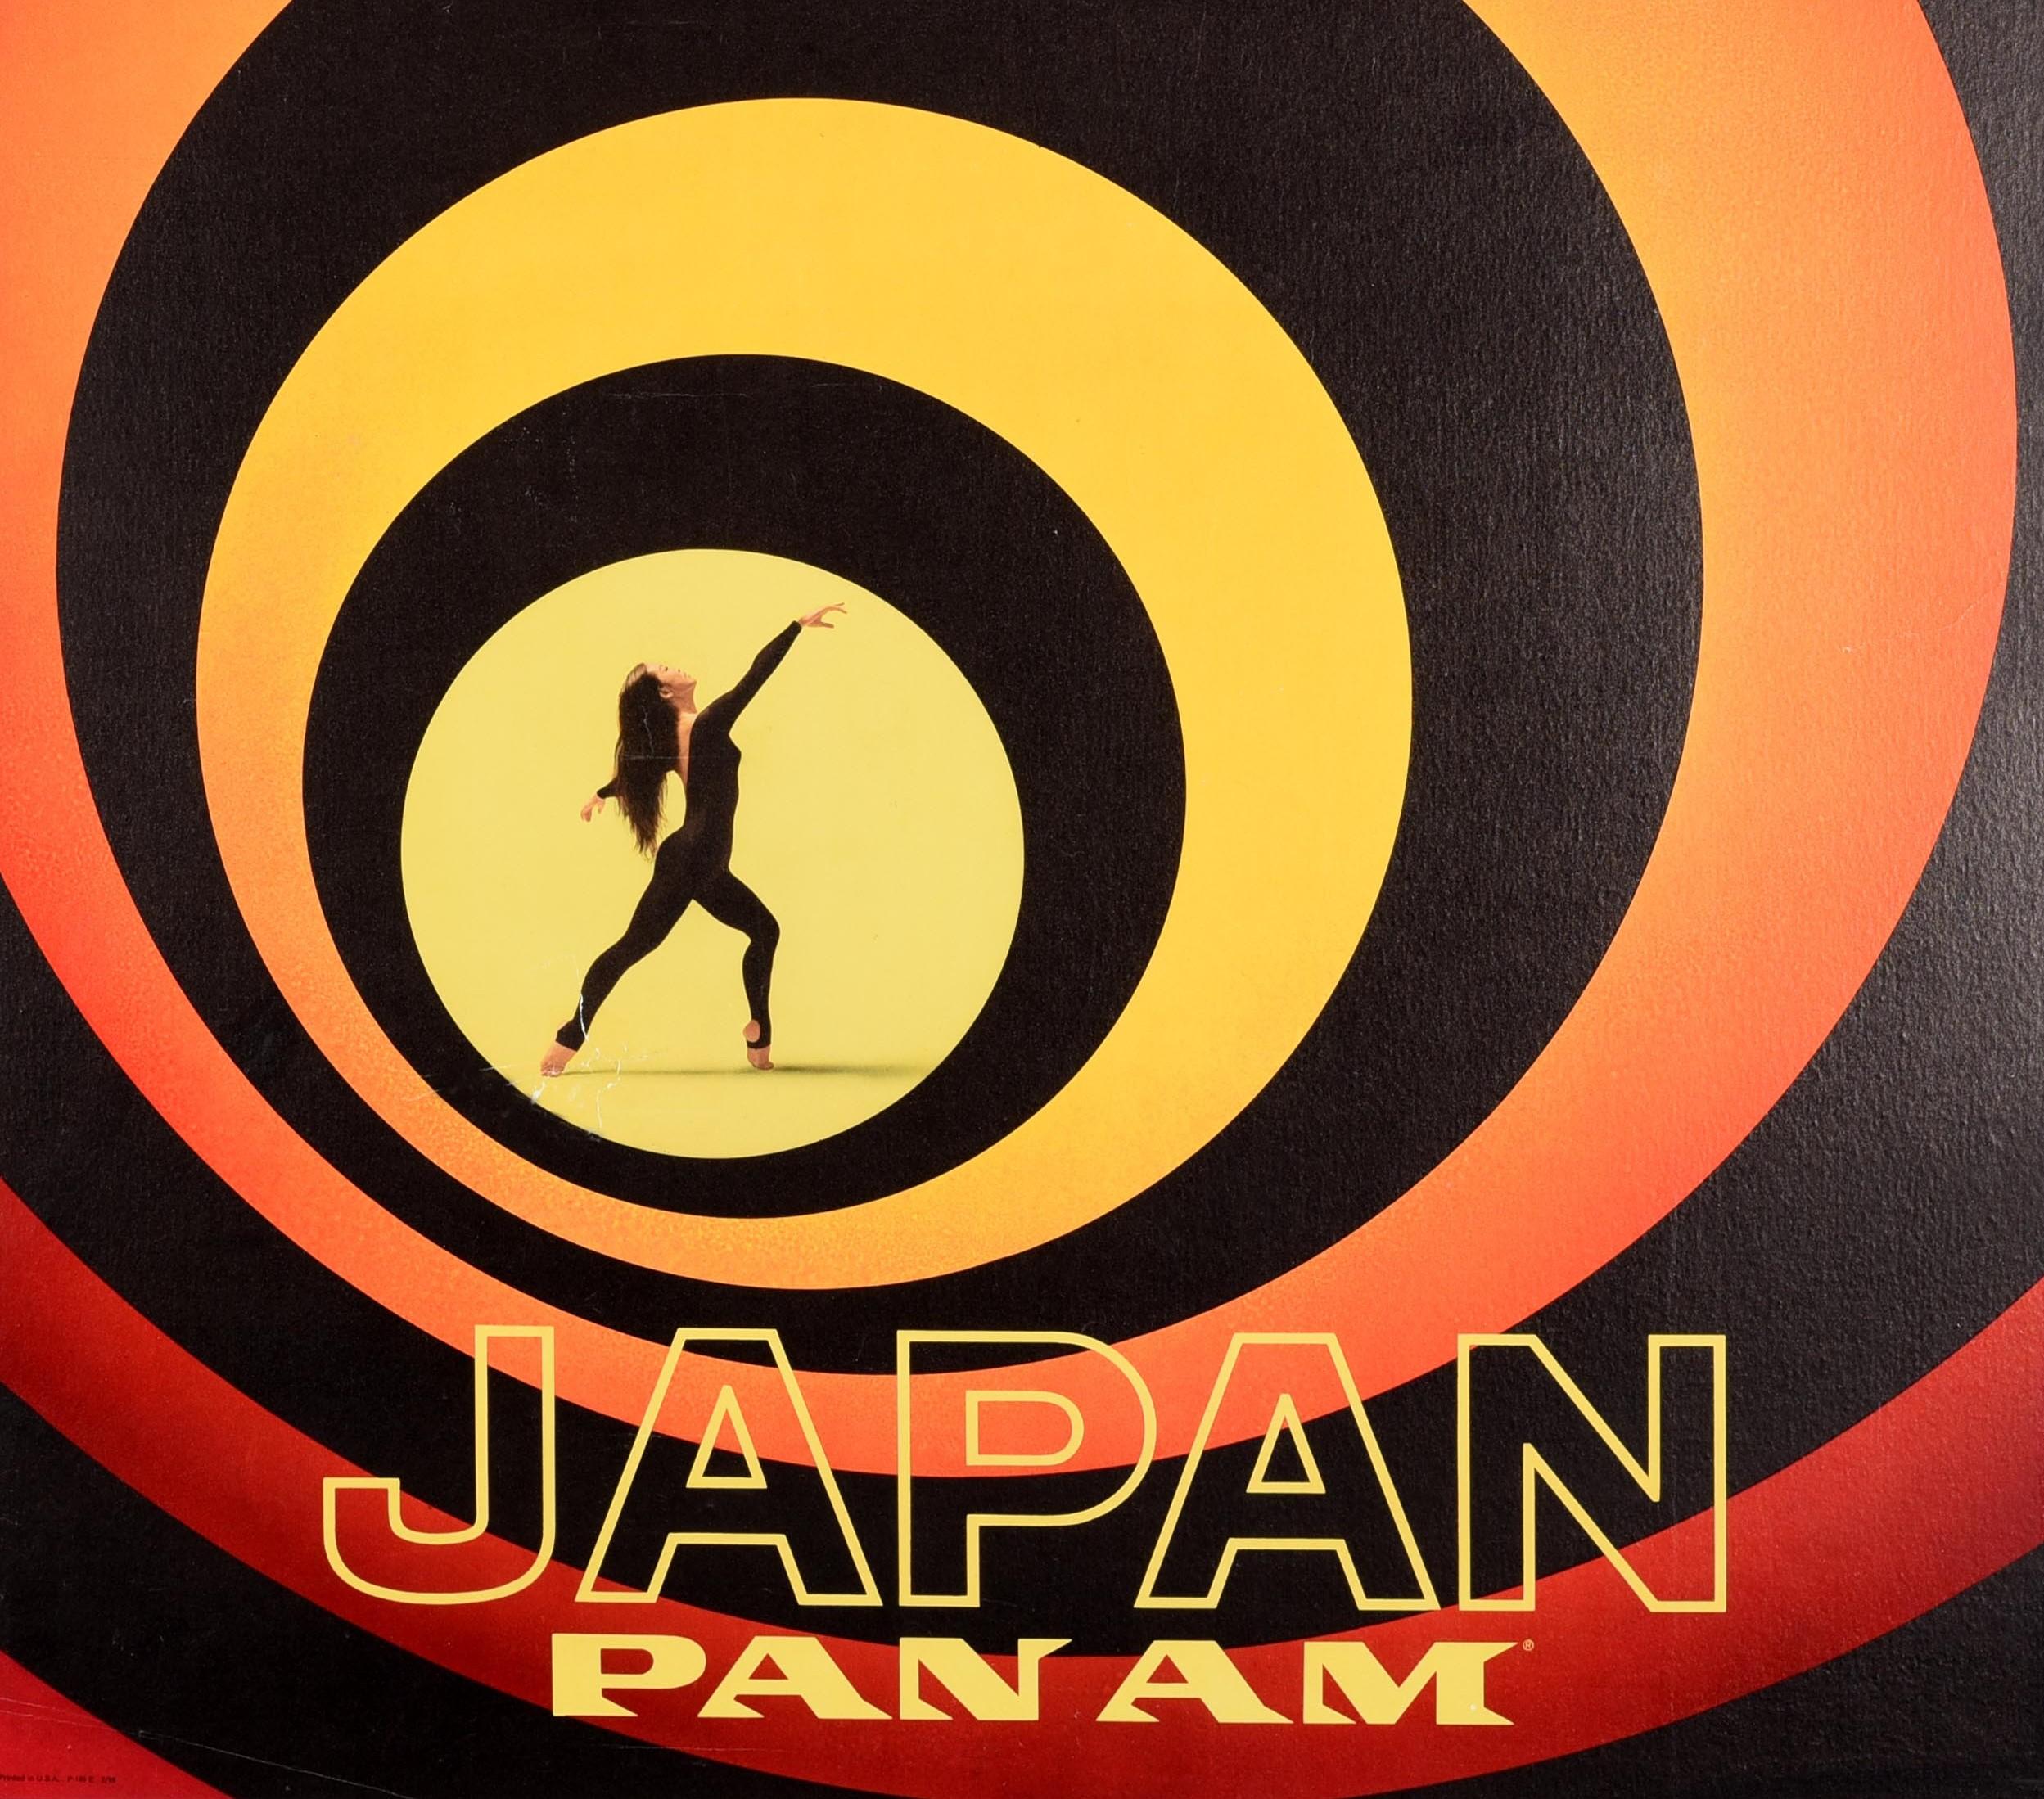 American Original Vintage Poster Japan Pan Am Travel Art Dancer James Bond Style Design